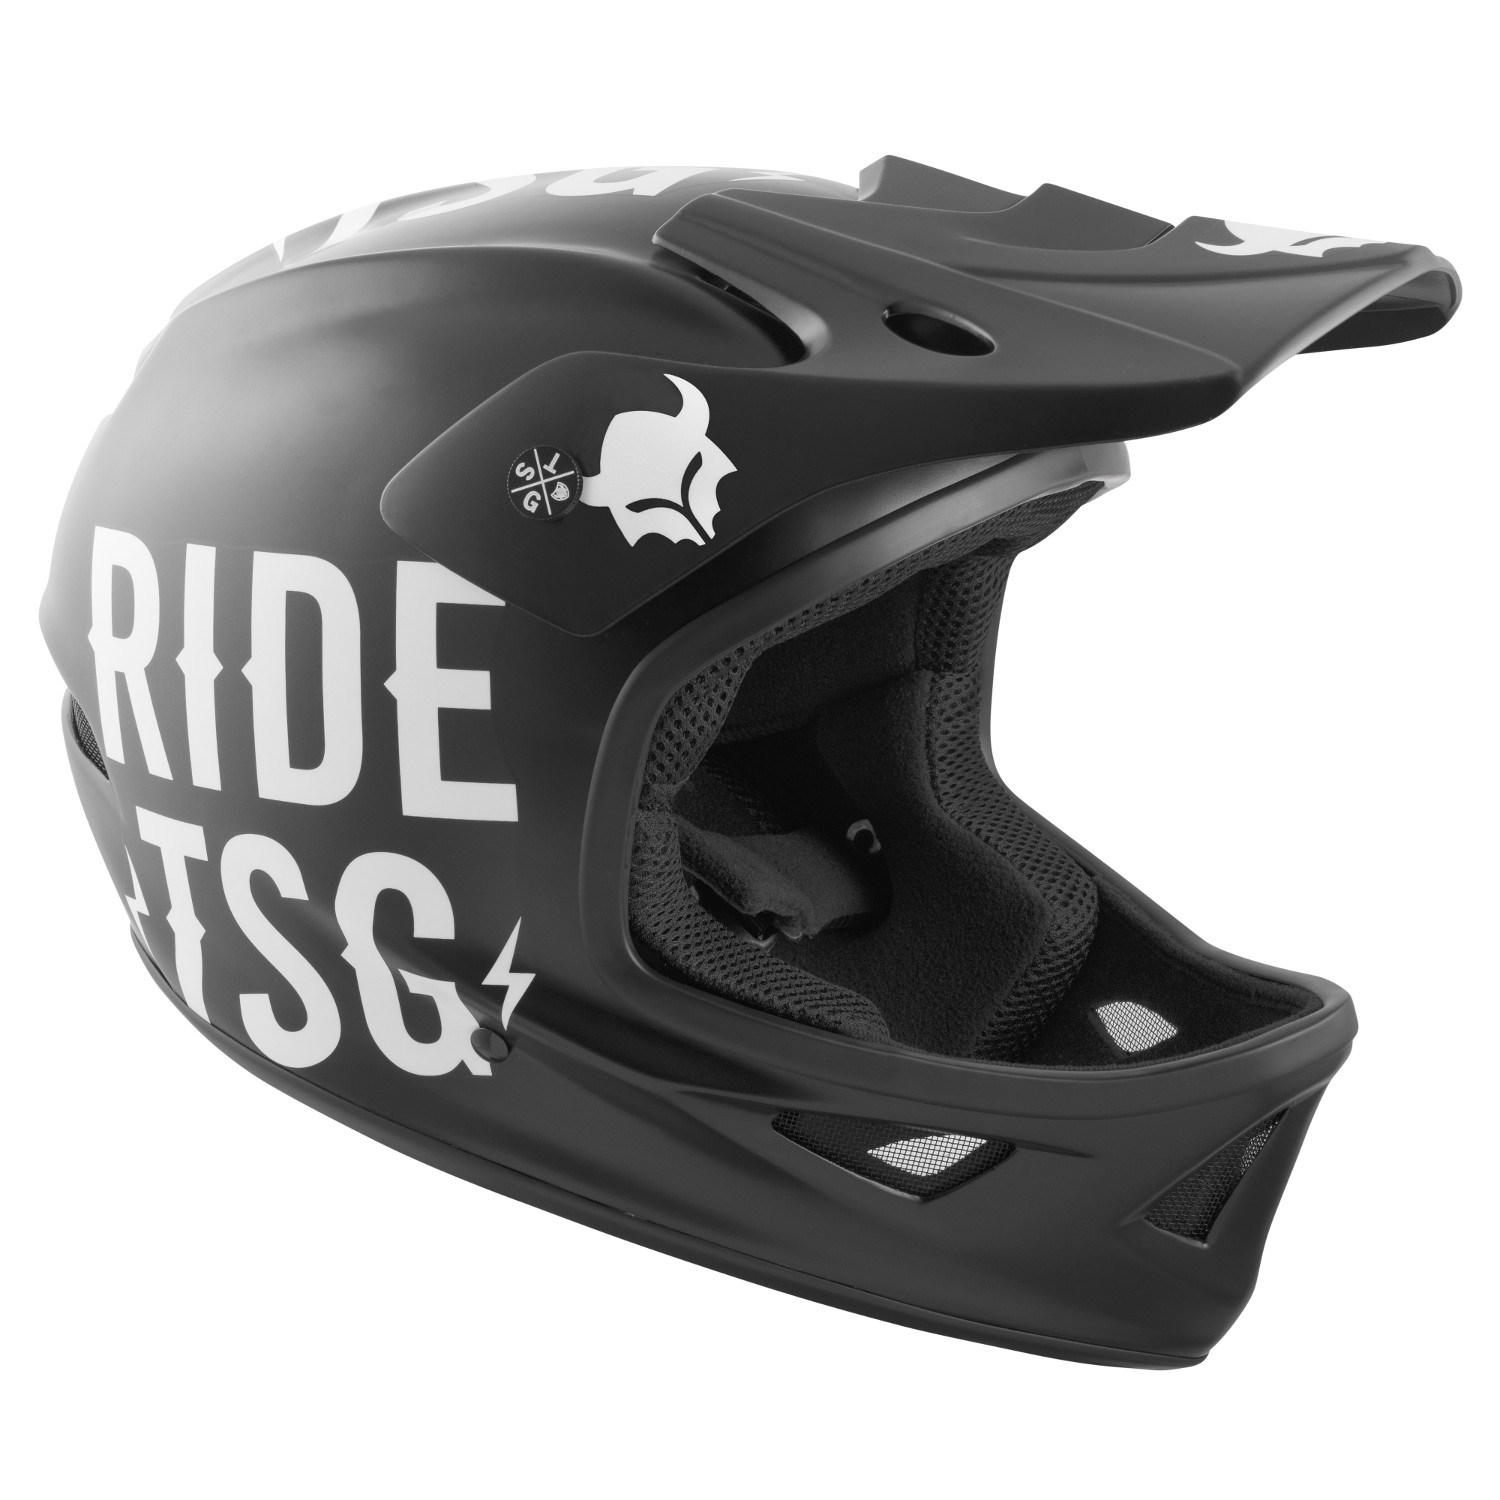 TSG Downhill-MTB Helmet Squad Graphic Design - Chopper